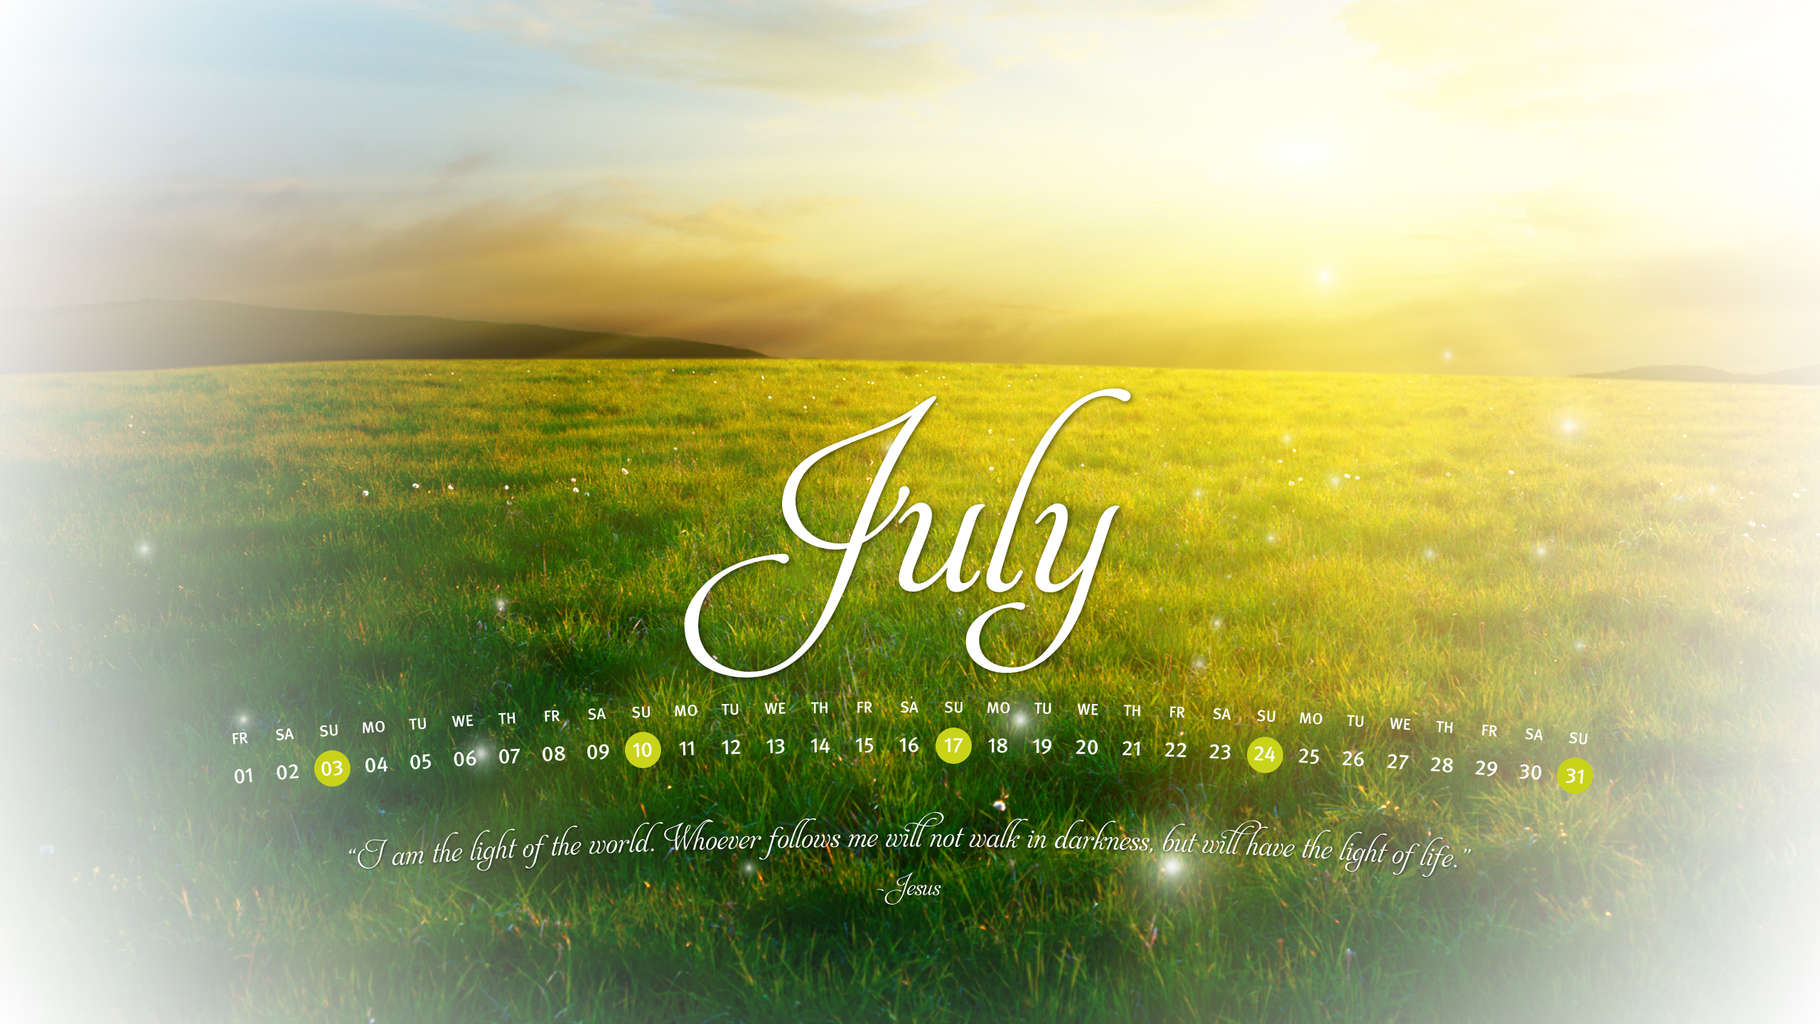 Free Desktop Wallpaper Calendars: July 2011 | Tim Challies